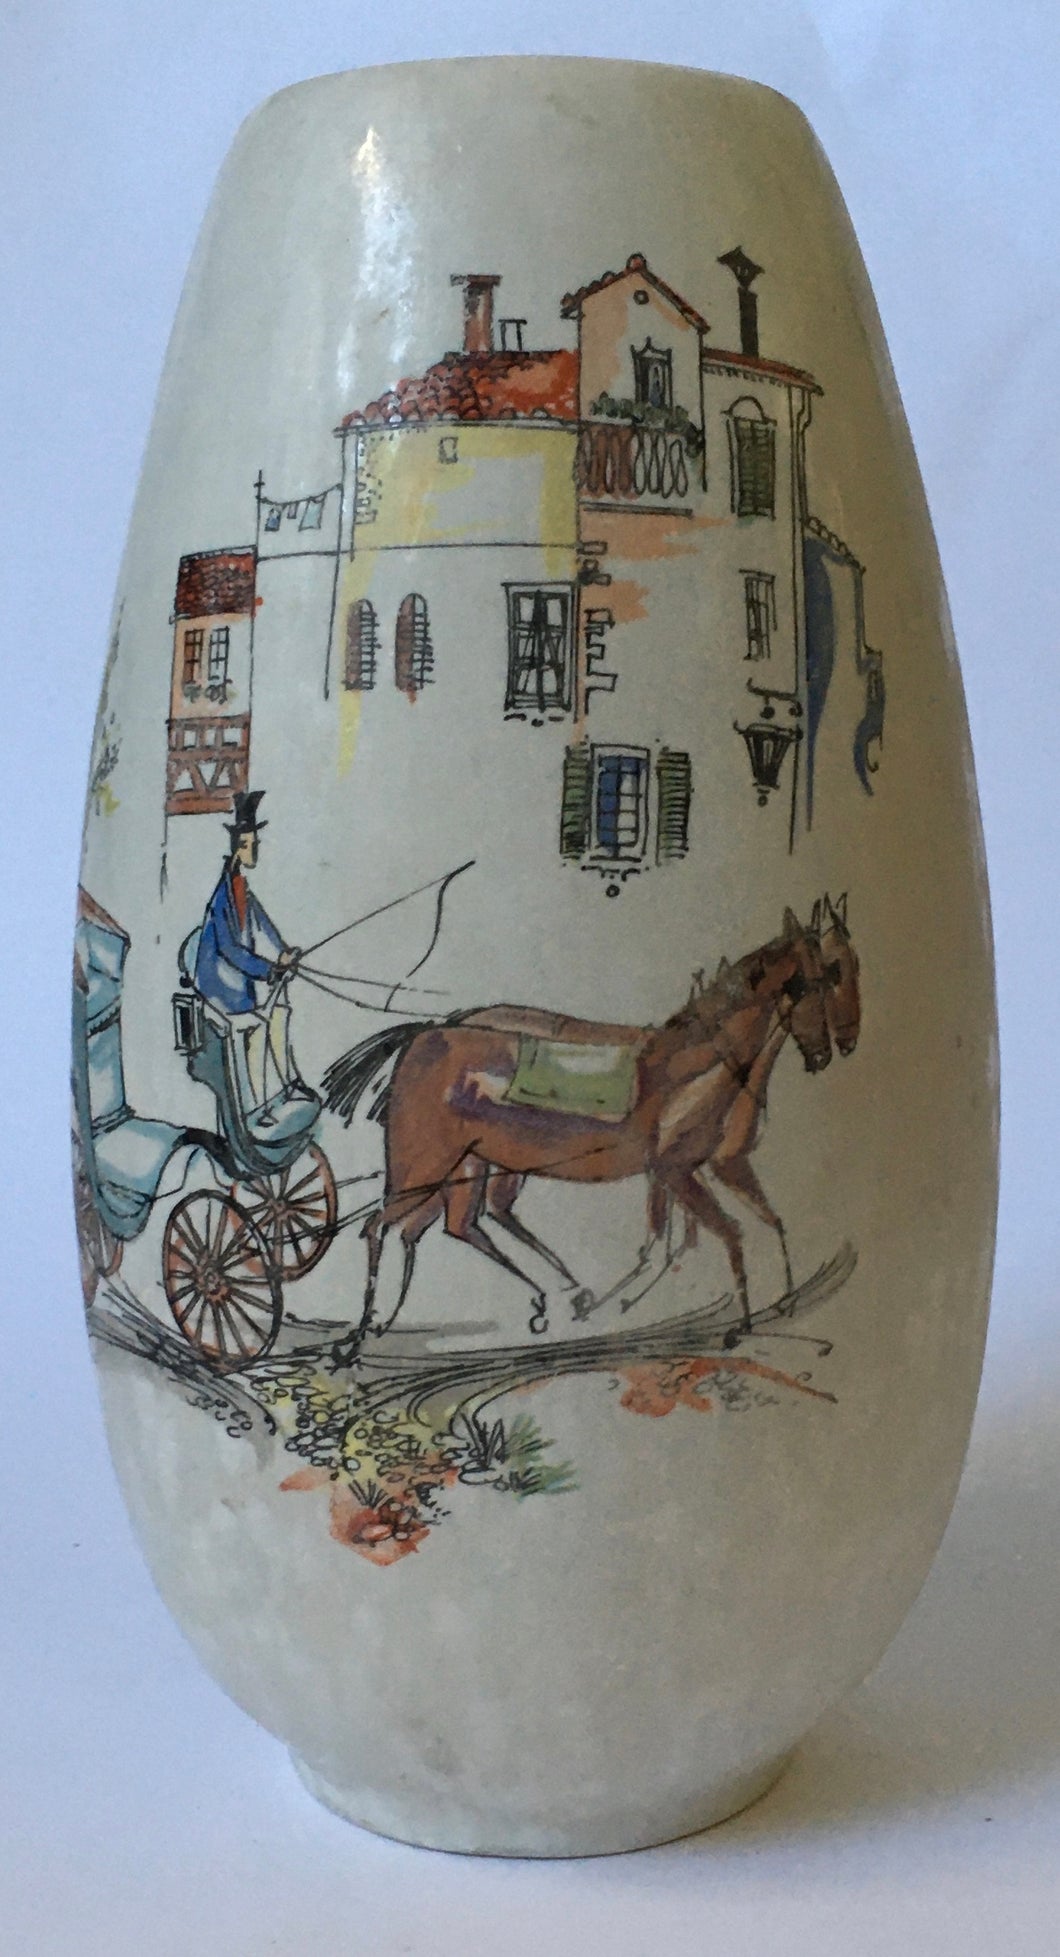 Jasba Keramik shape 101/22 Vase West German Pottery mid century Modern Horse and carriage scene Germany